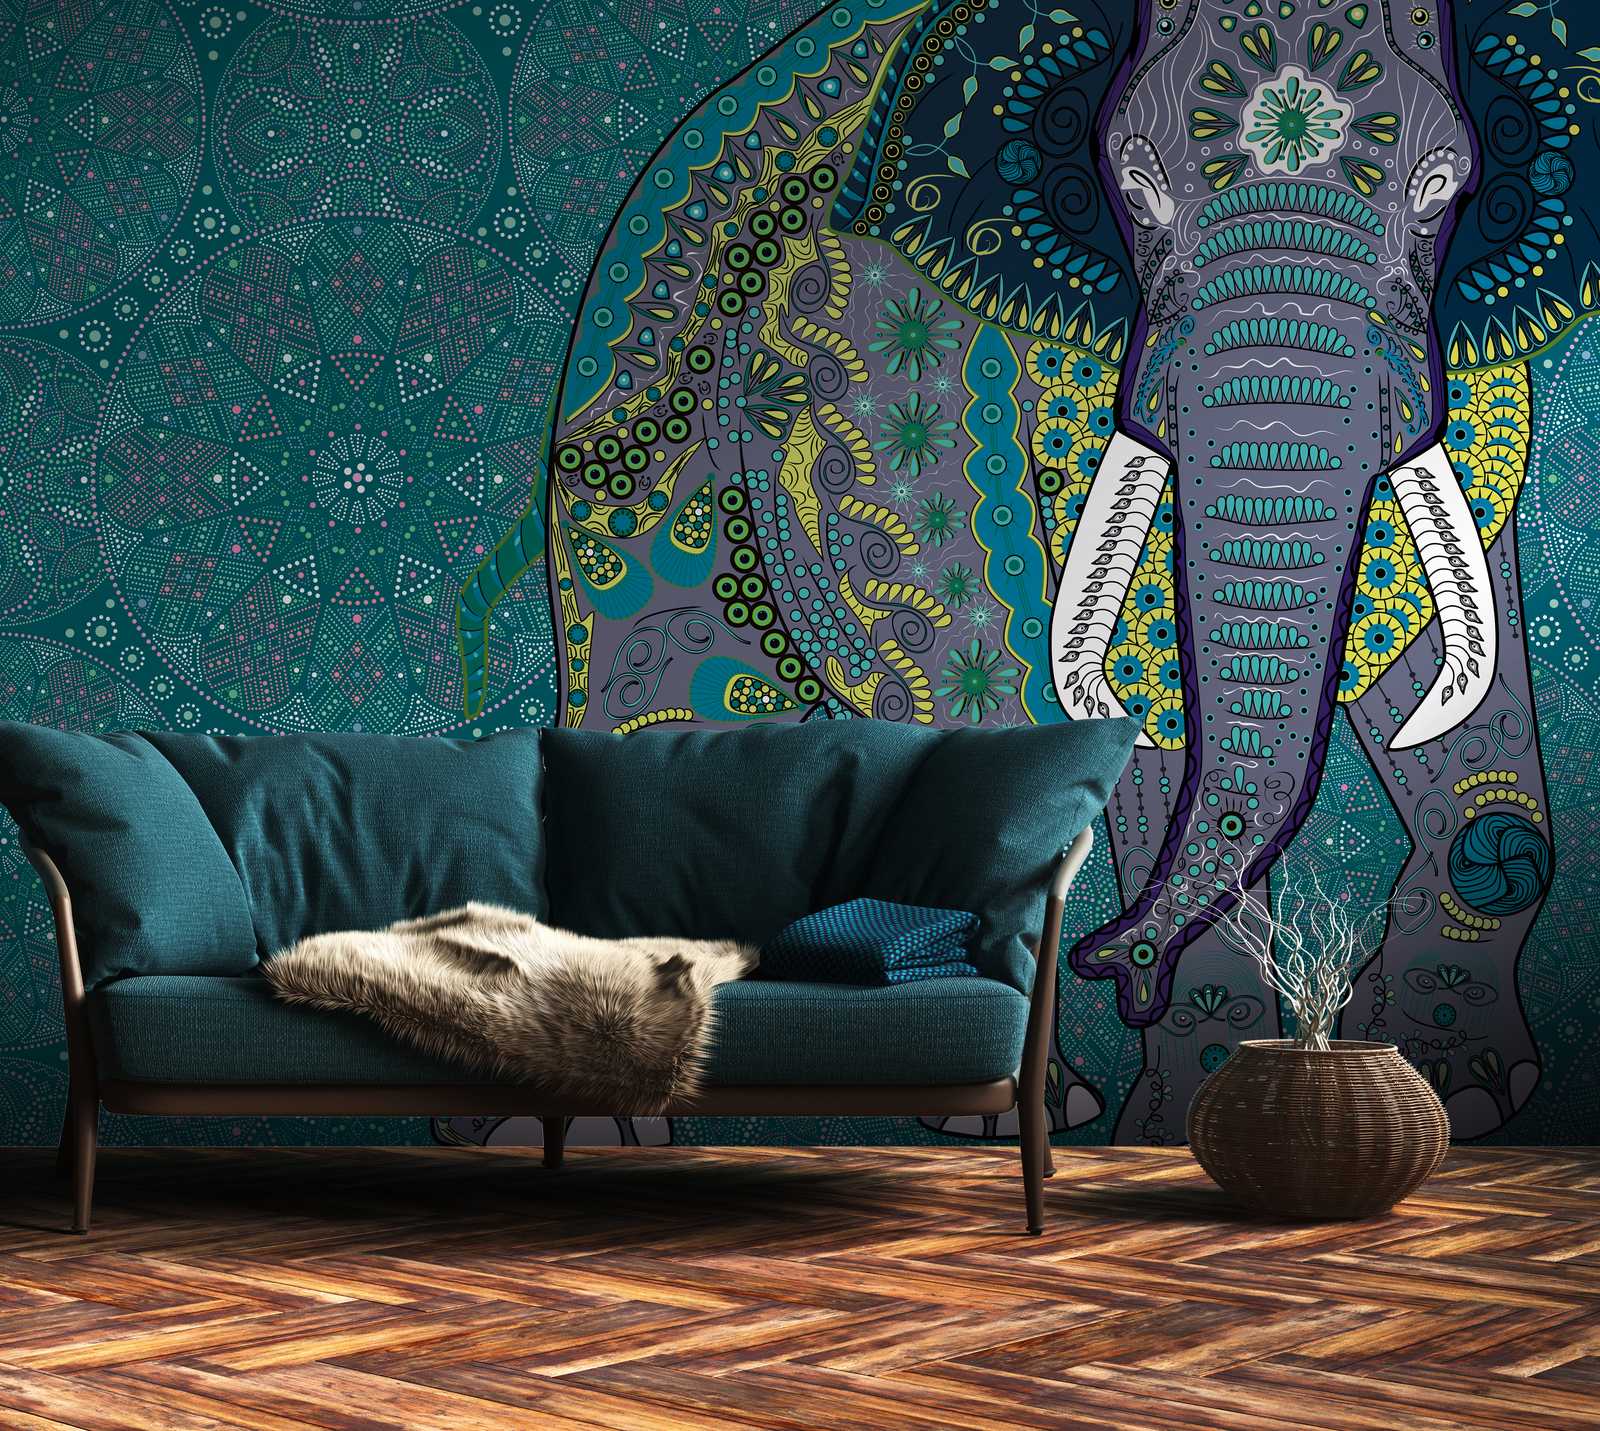             Wallpaper novelty | elephant wallpaper mandala motif in Indian style
        